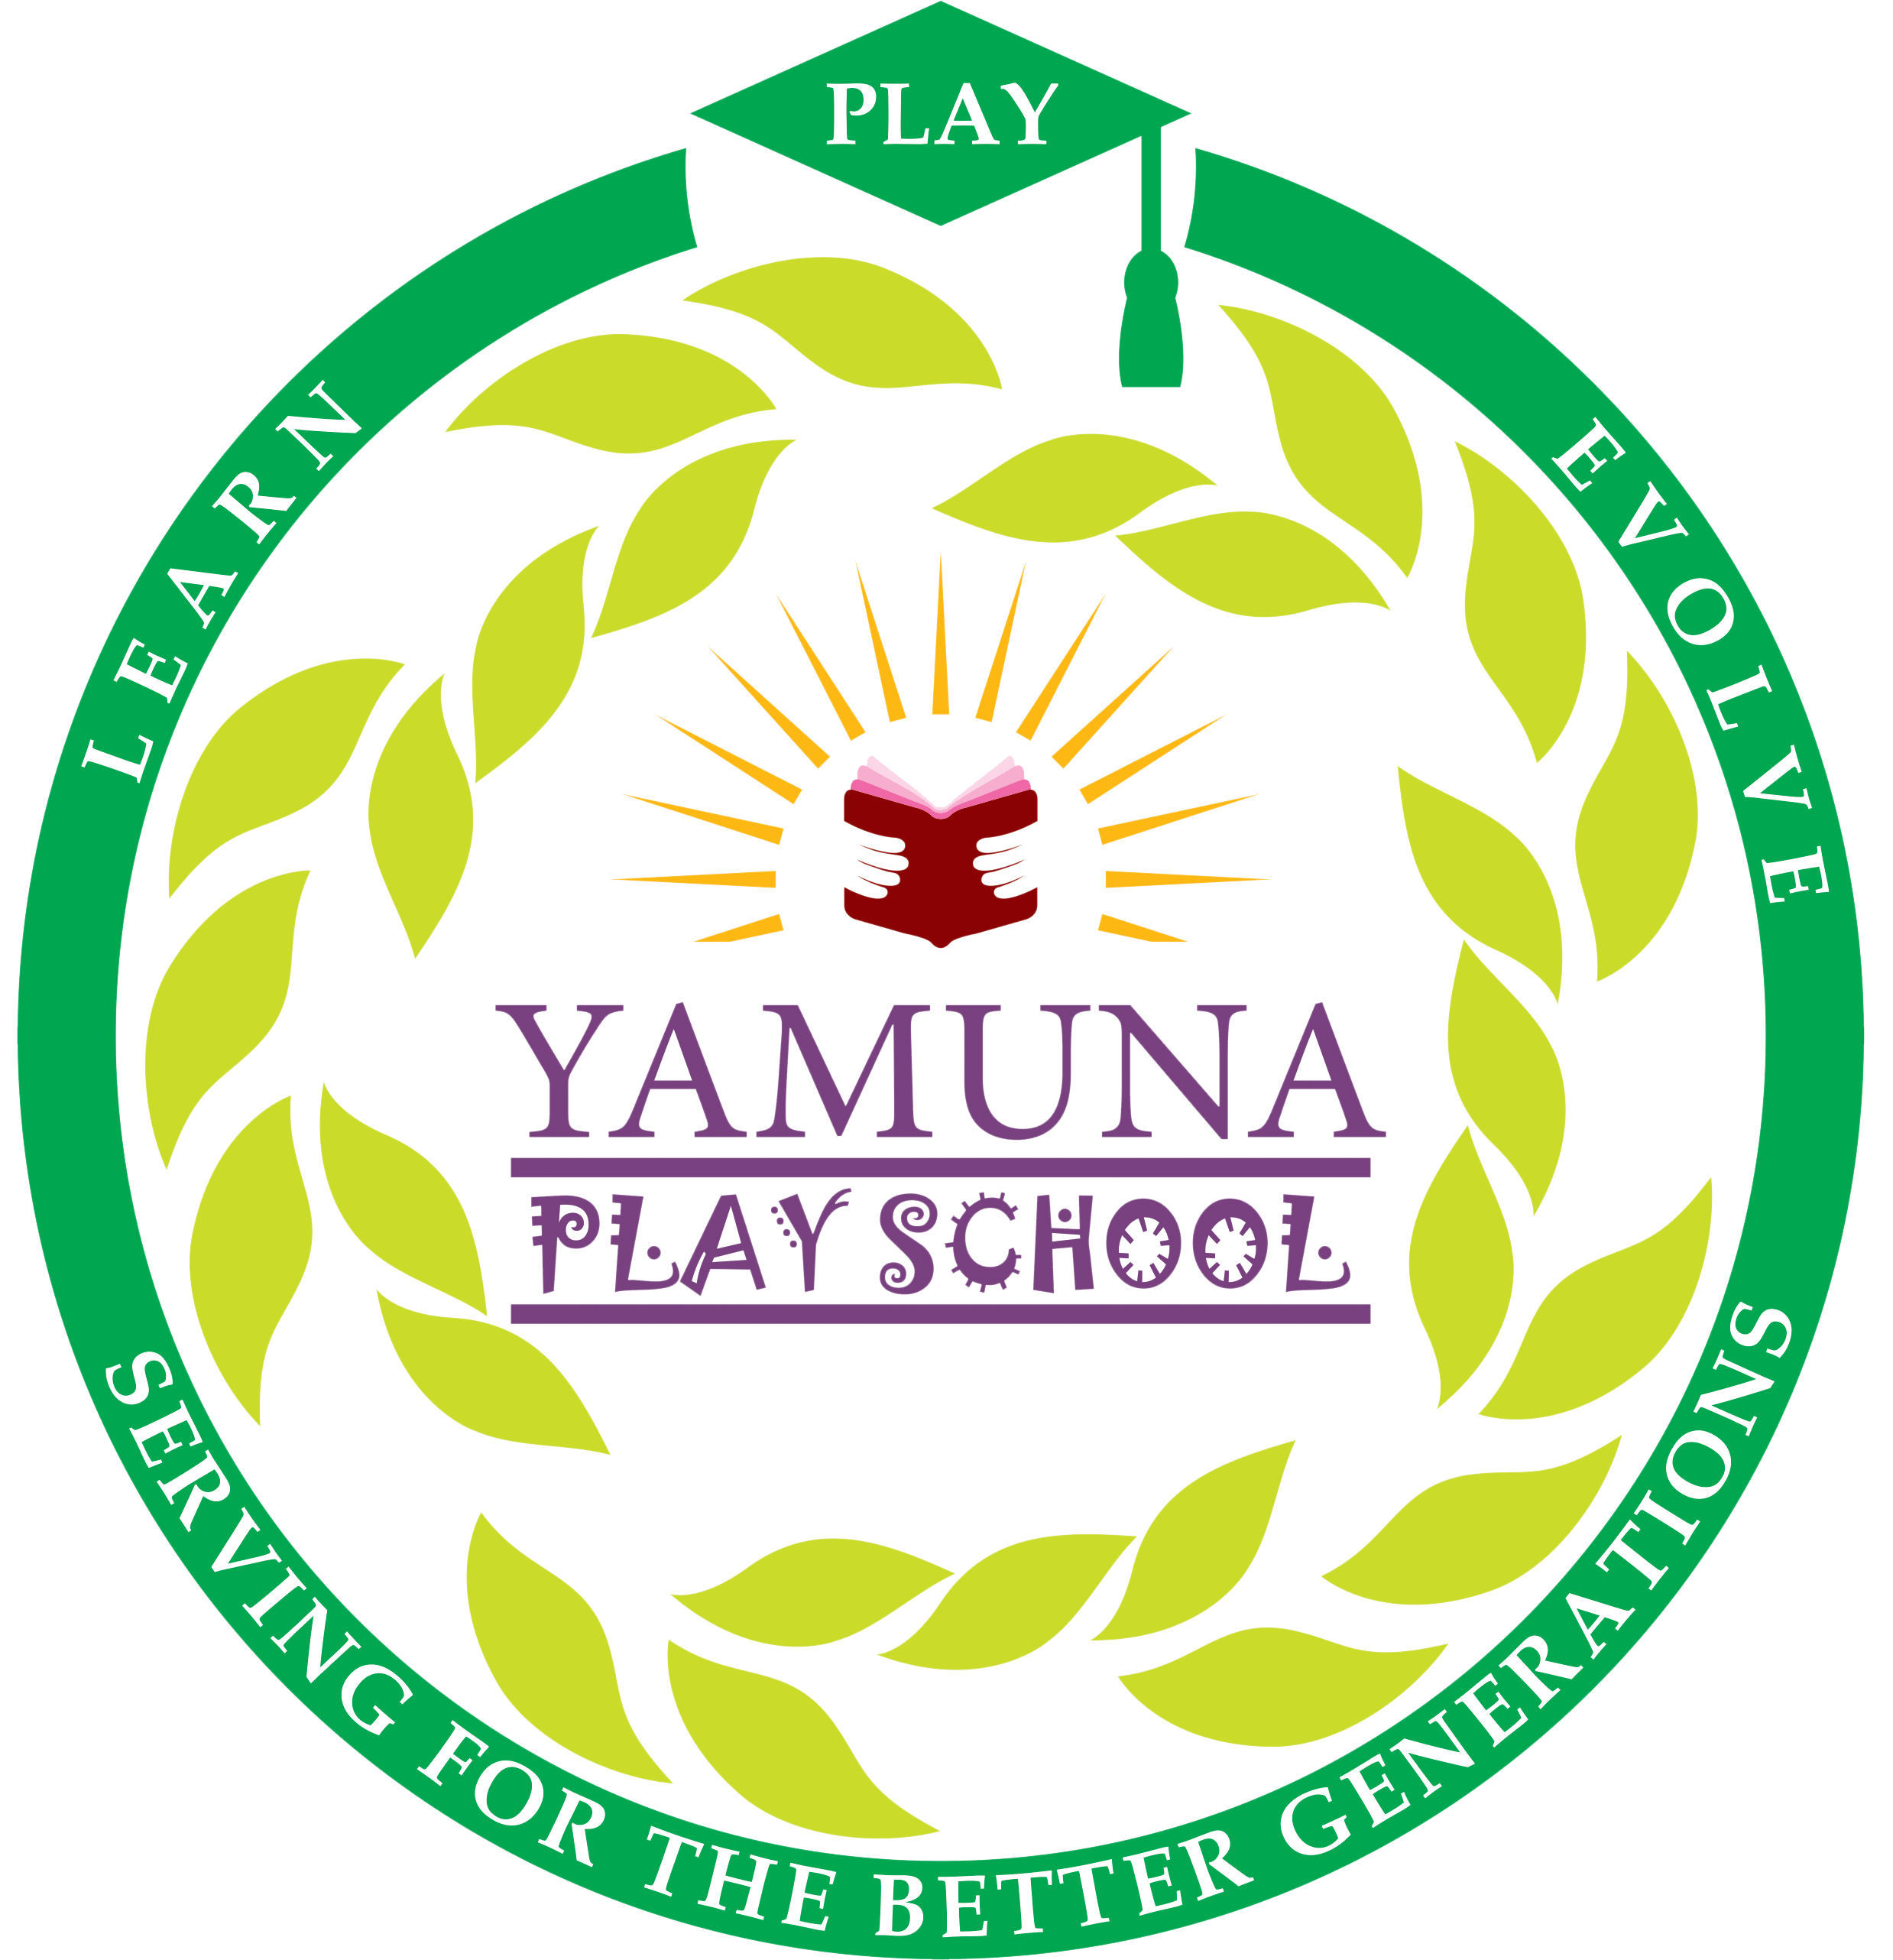 YAMUNA PLAY SCHOOL